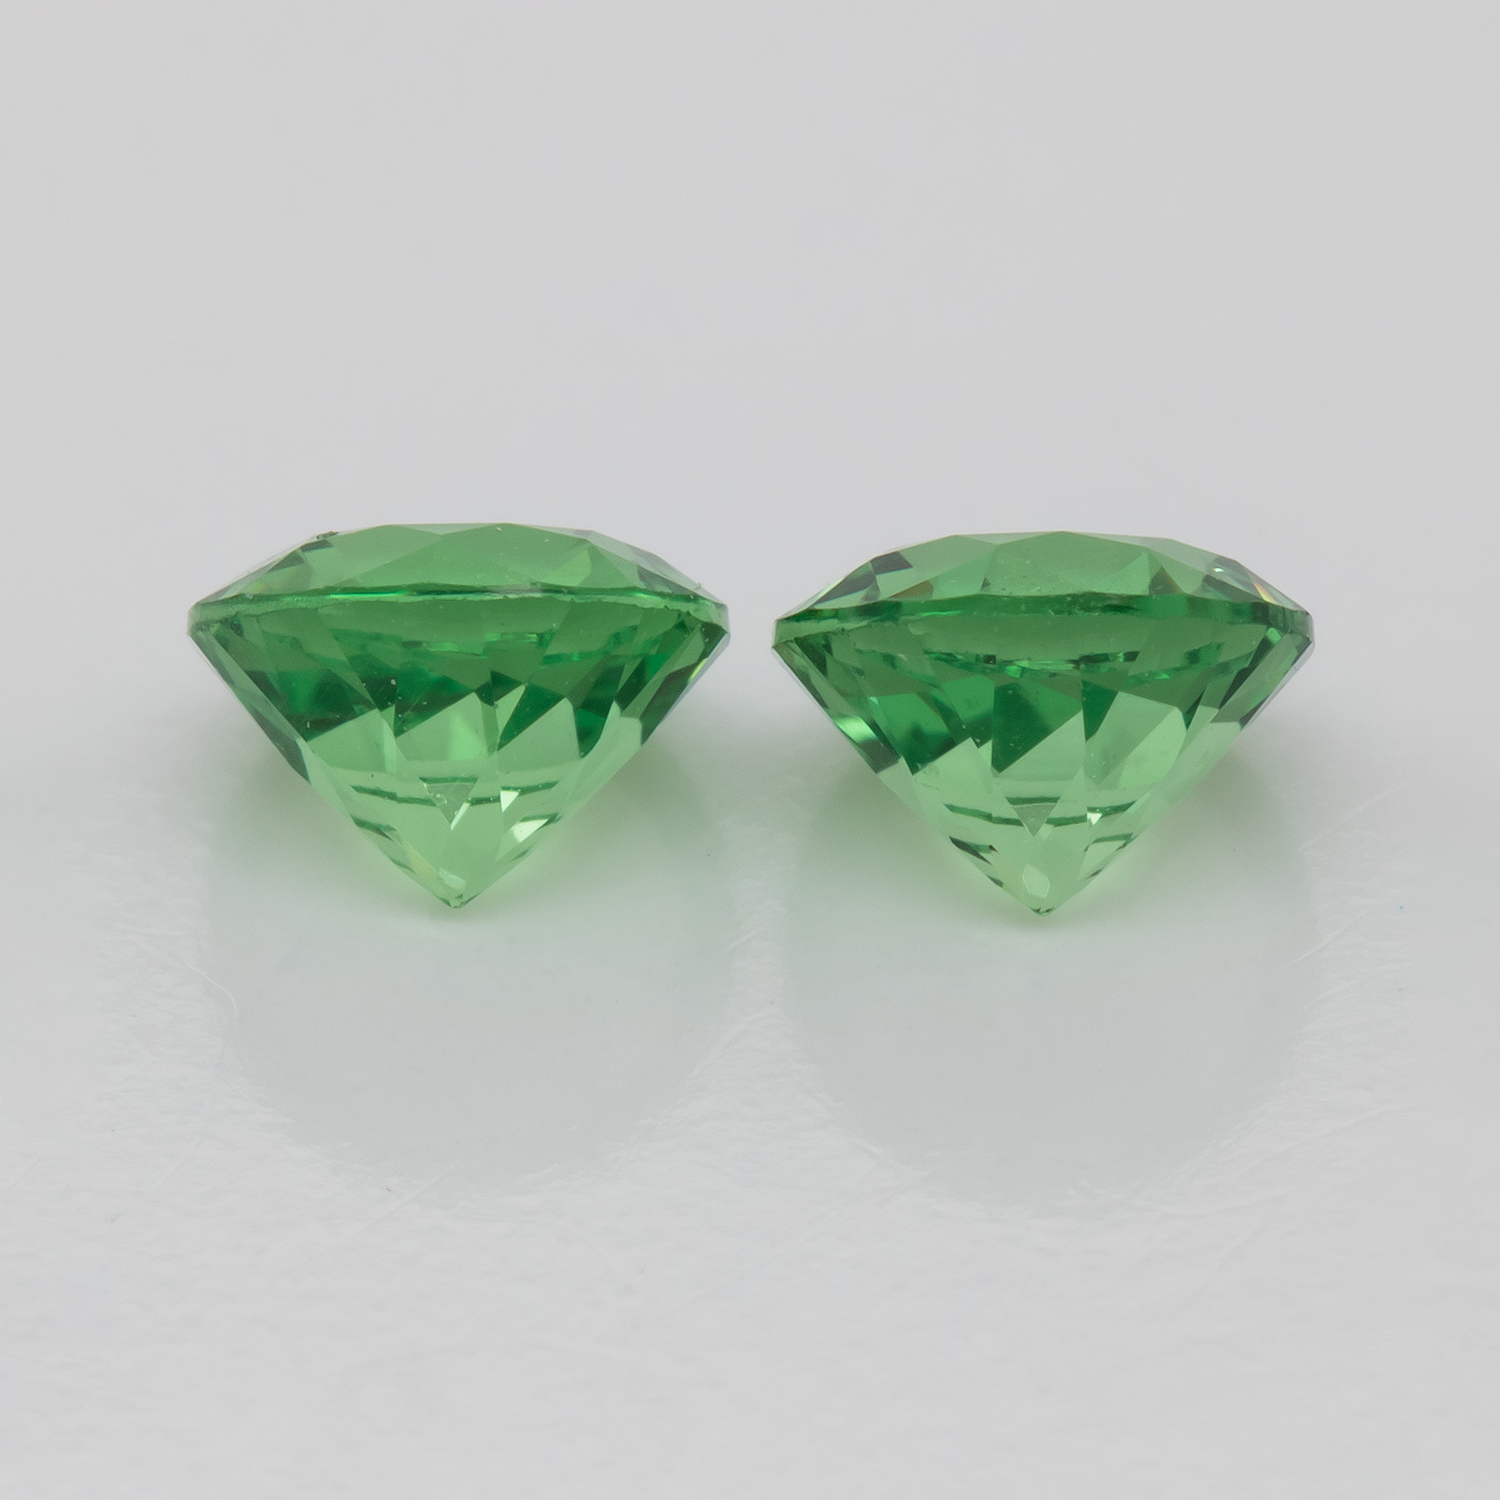 Tsavorite Pair - green, round, 4.5x4.5 mm, 0.84 cts, No. TS91012